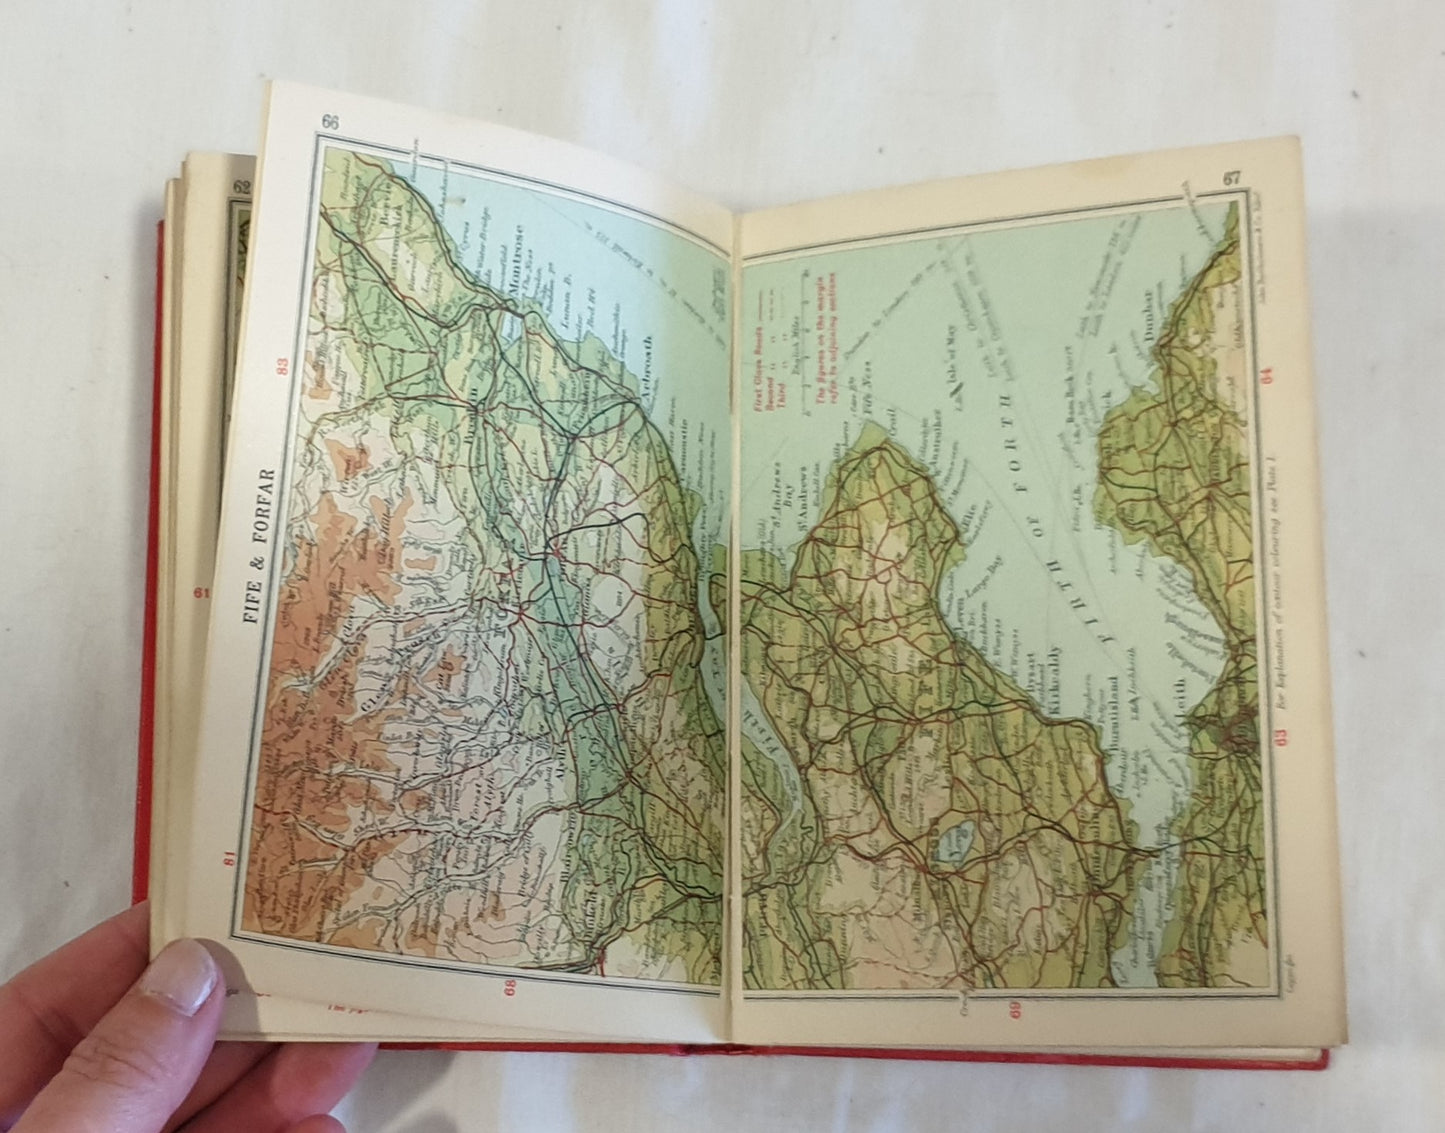 The Handy Touring Atlas of the British Isles by J. G. Bartholomew